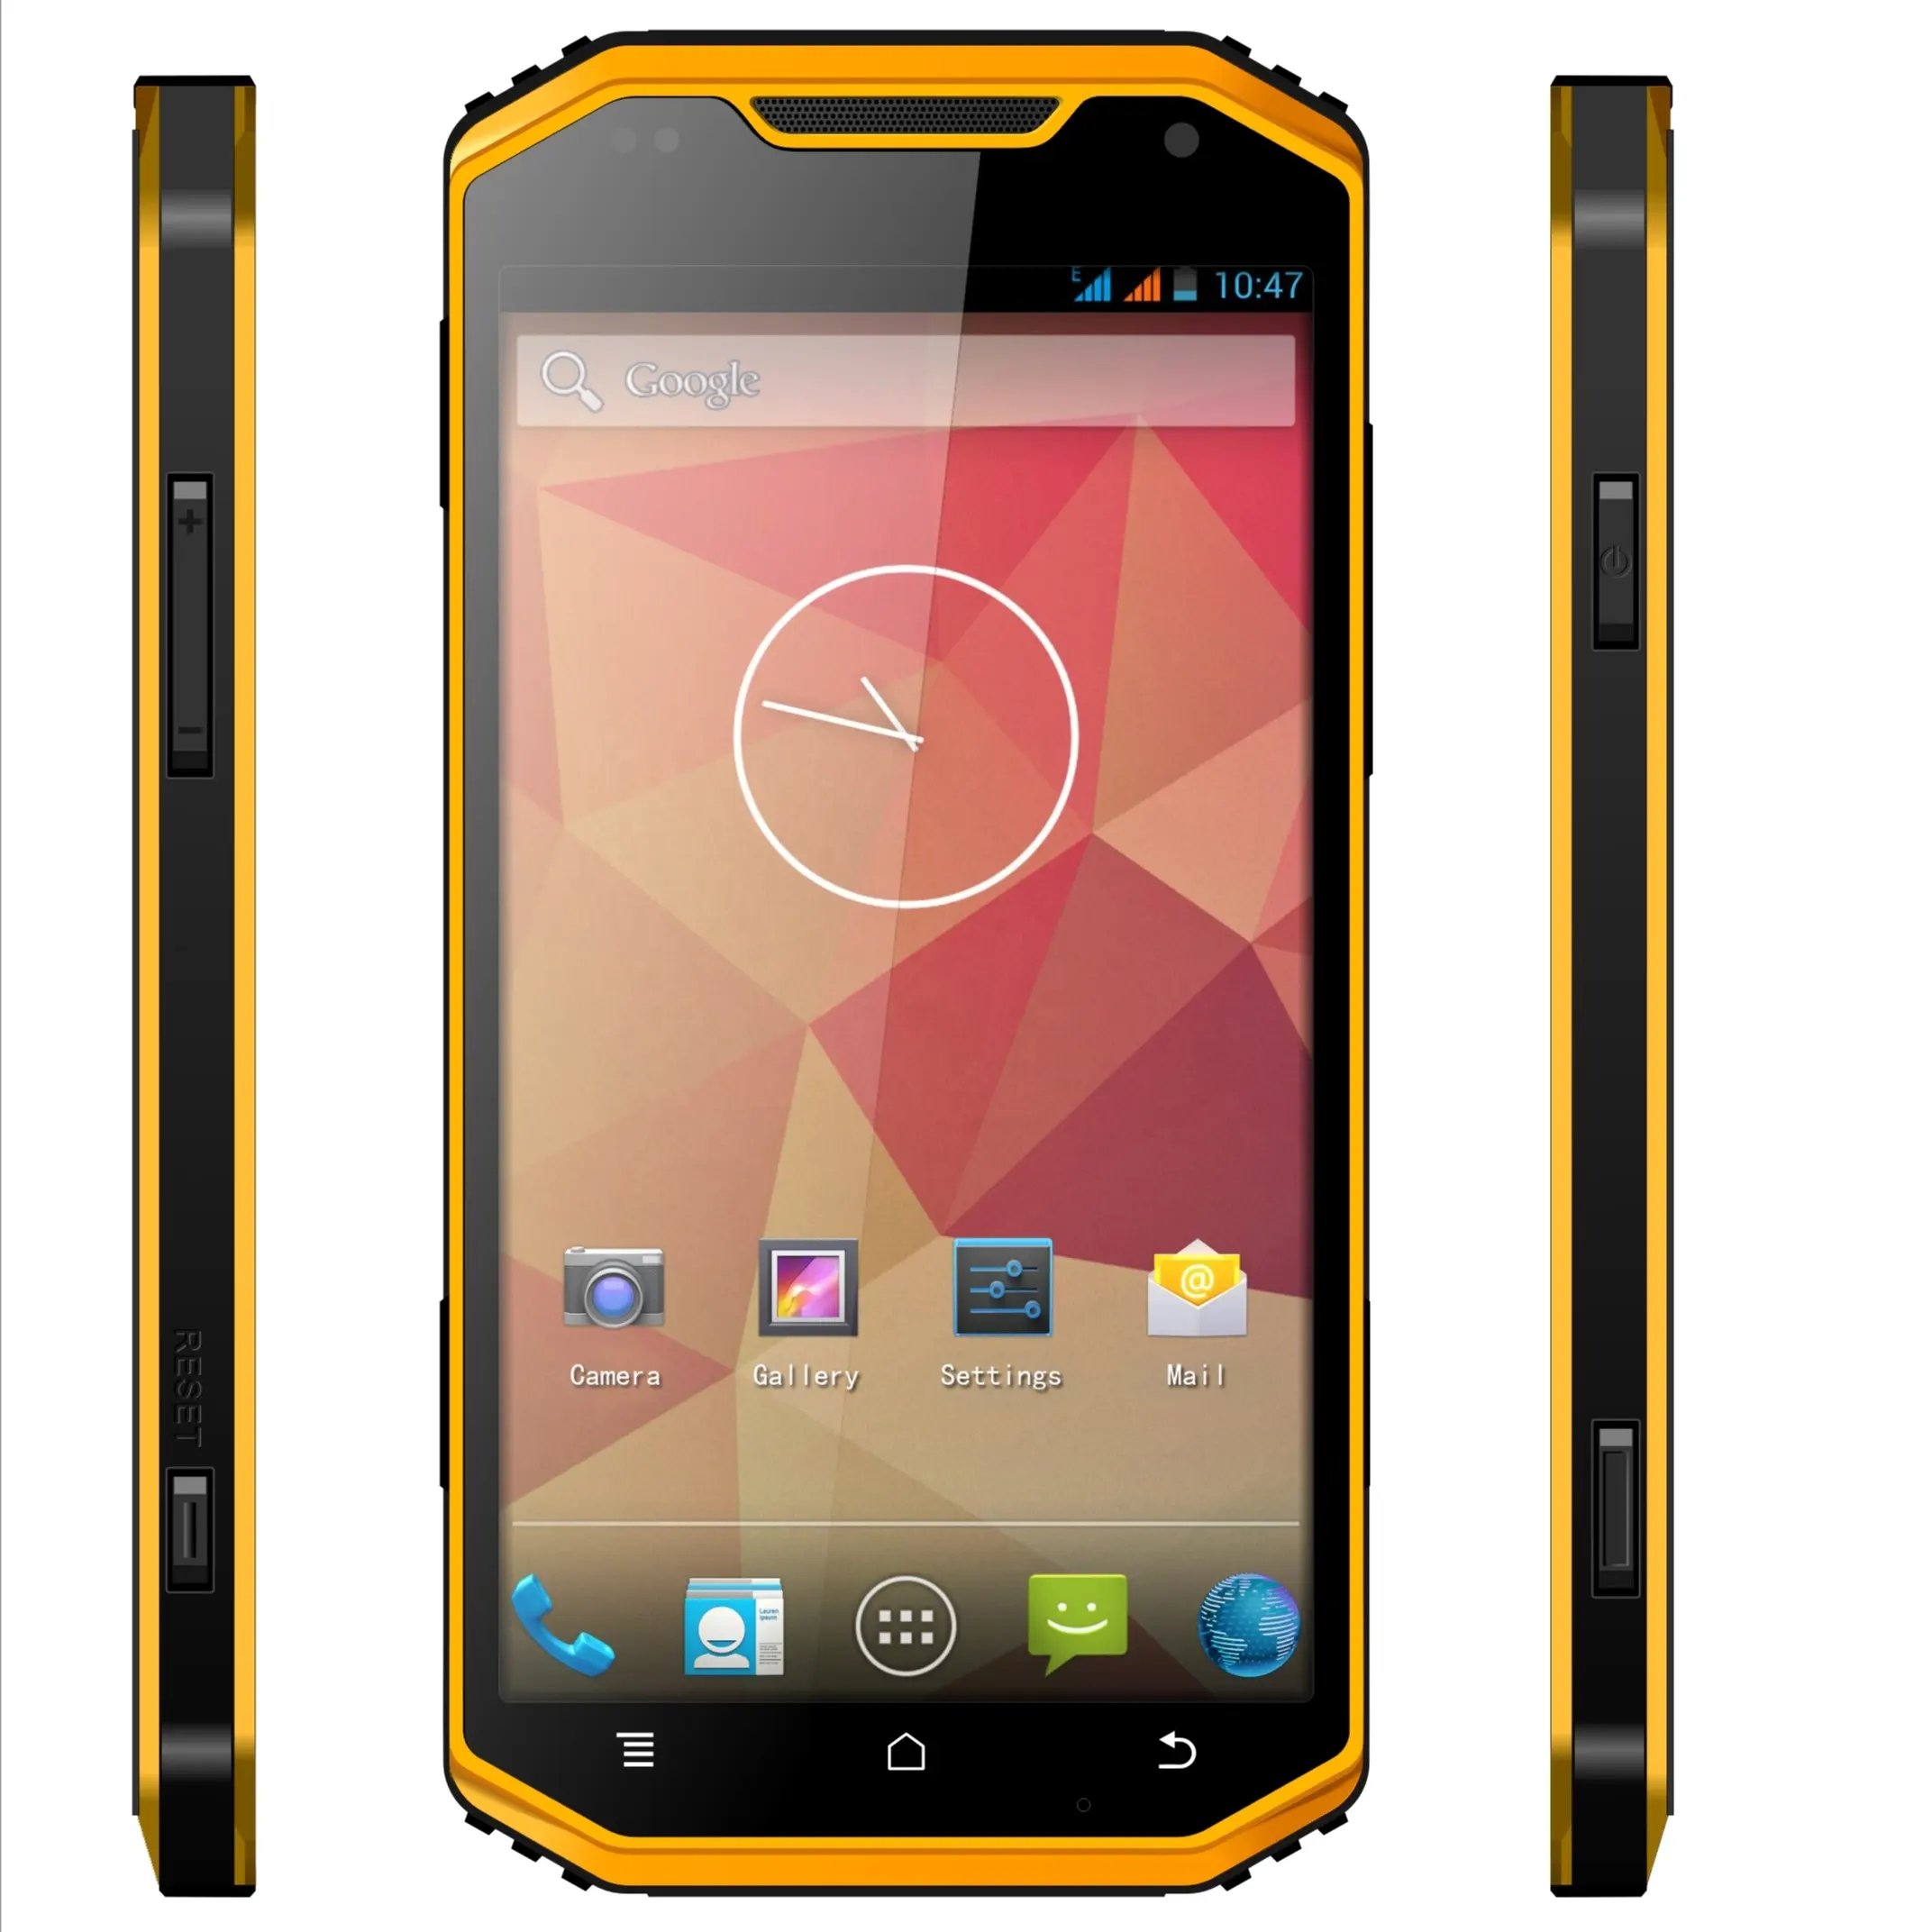 H20 dalgıç Android 4.2 dört çekirdekli IP68 sınıf cep telefonu (Saral S not)